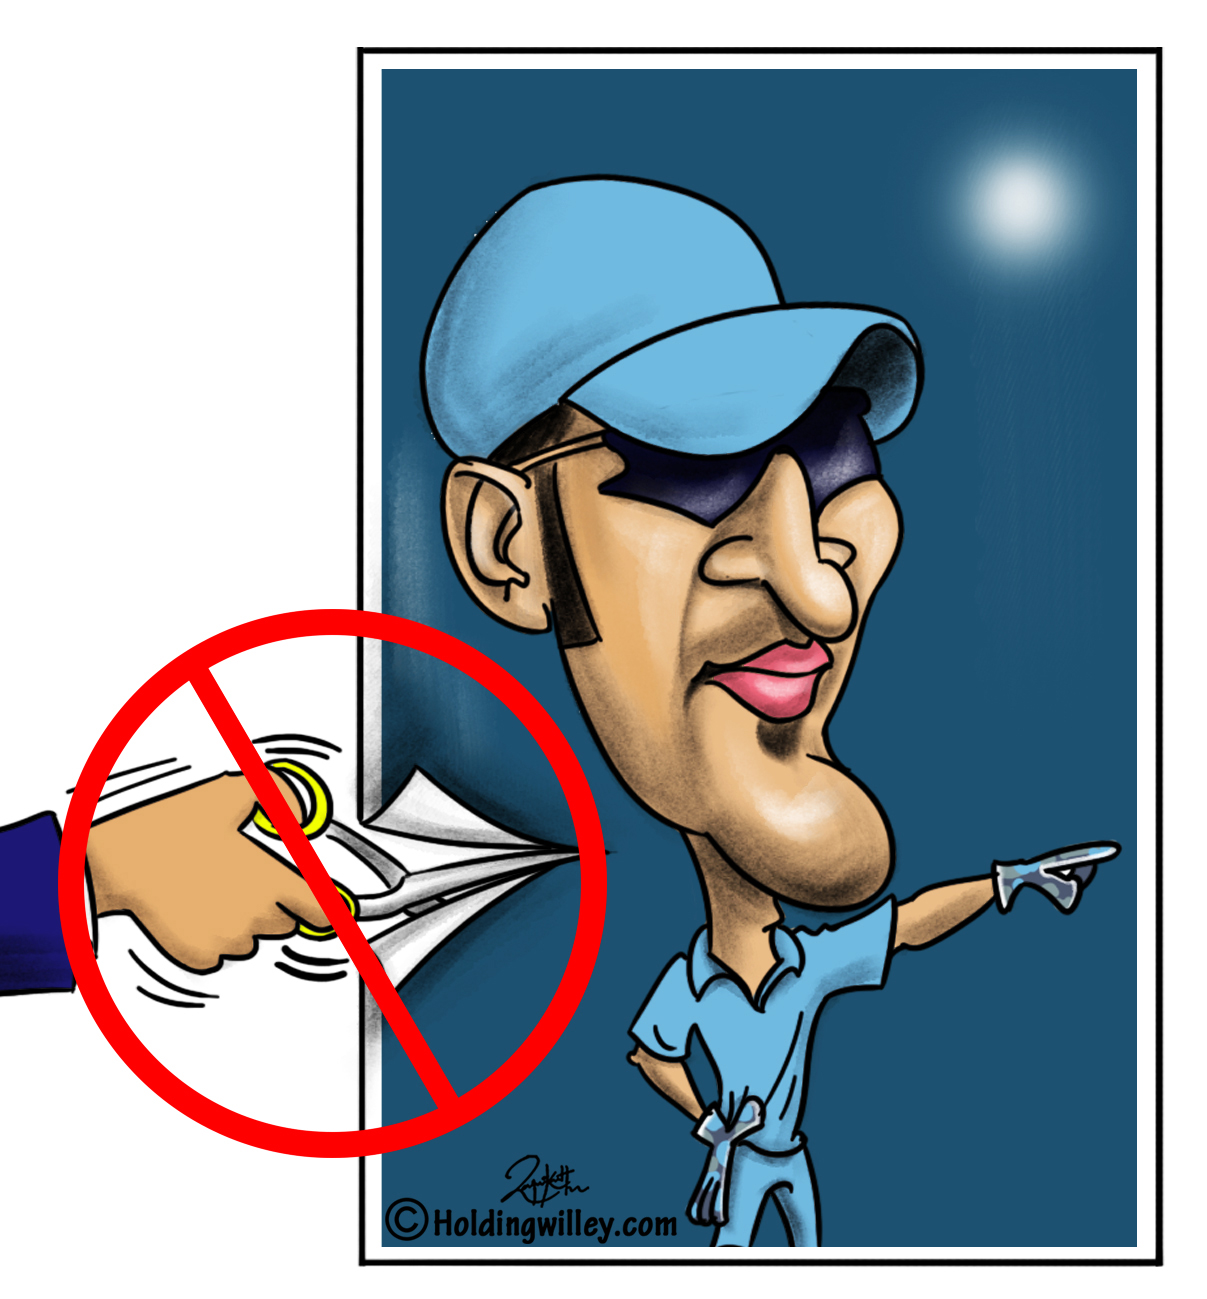 MS_Dhoni_India_Cricket_T20